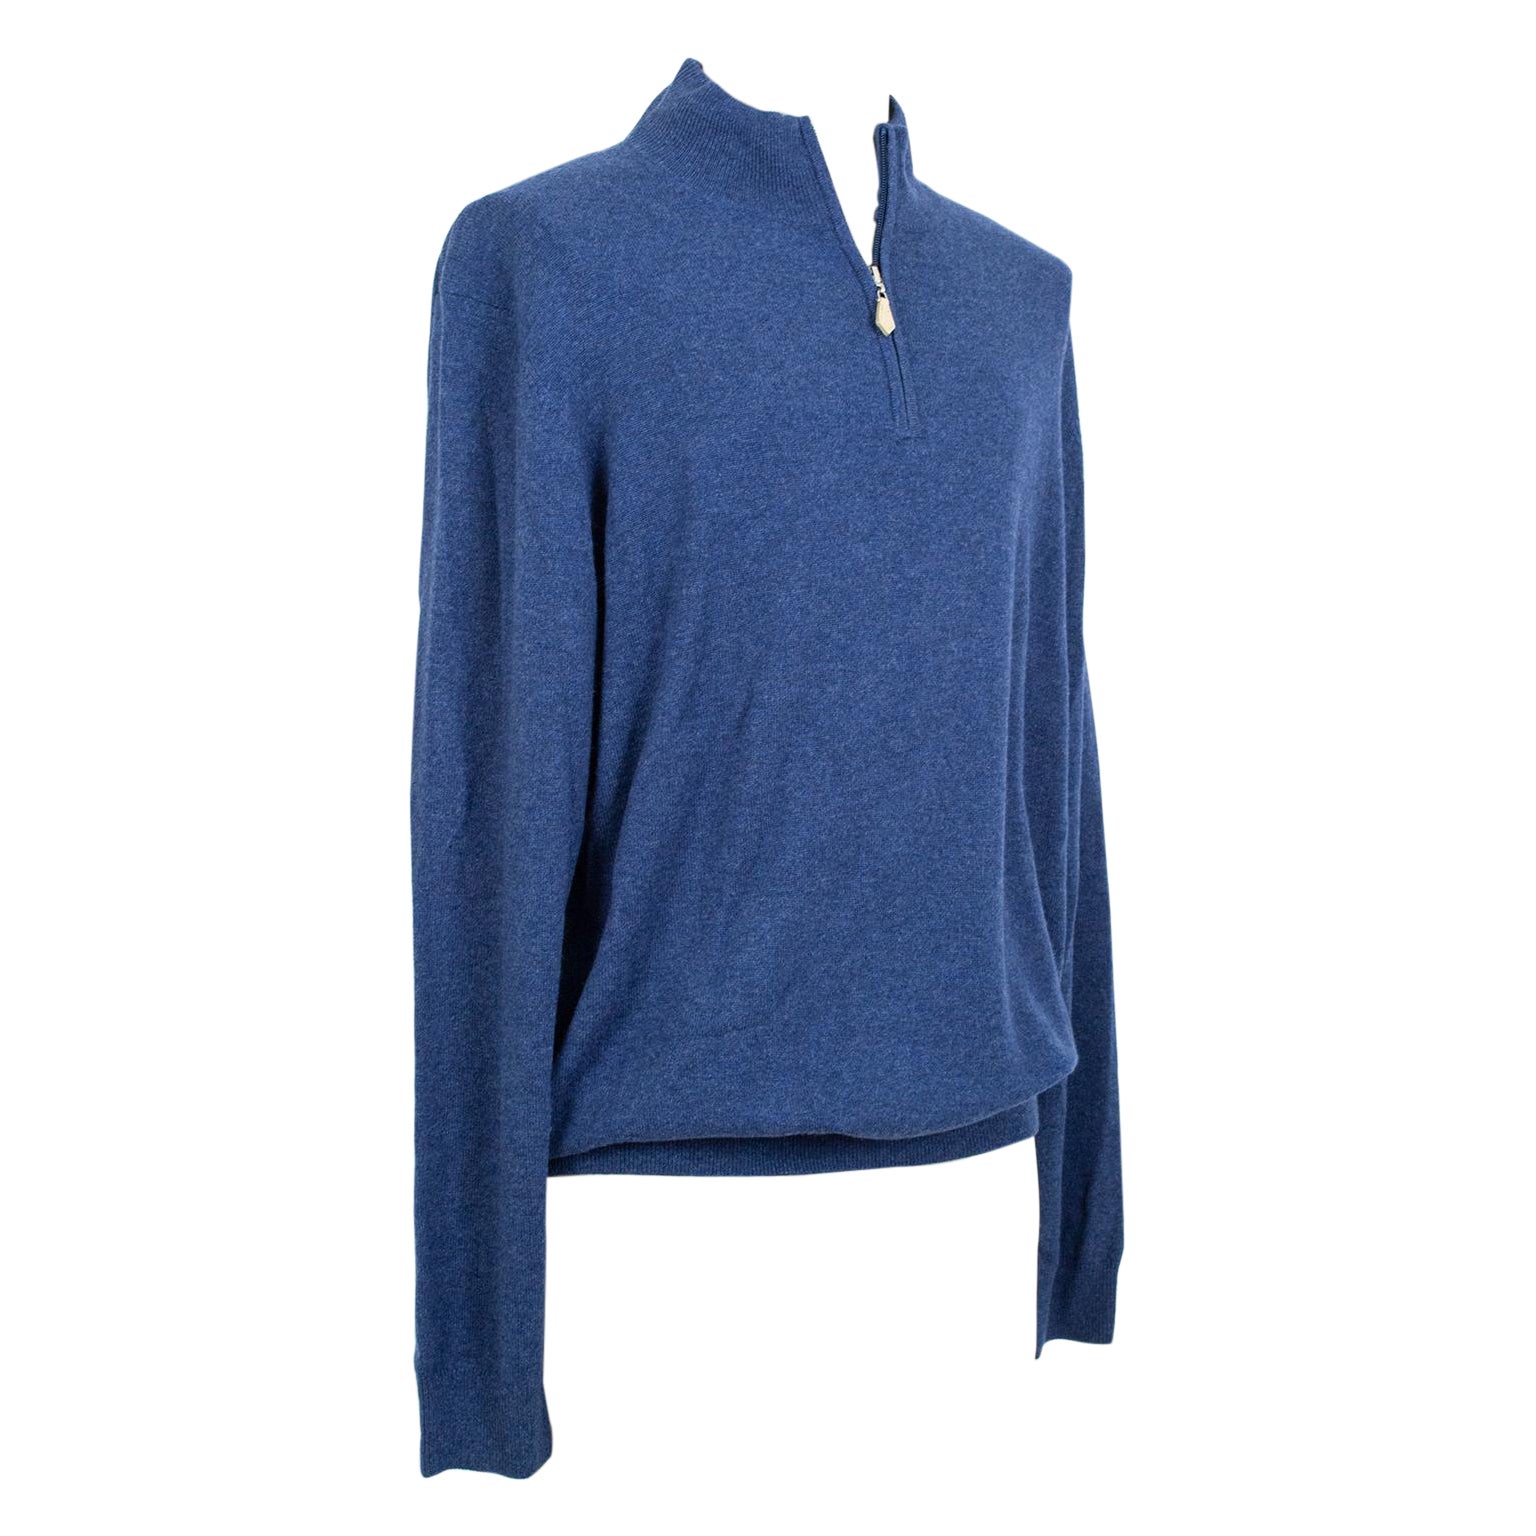 New *Large Size* Men’s Neiman Marcus Blue Cashmere Half-Zip Sweater – XXL, 2019 For Sale